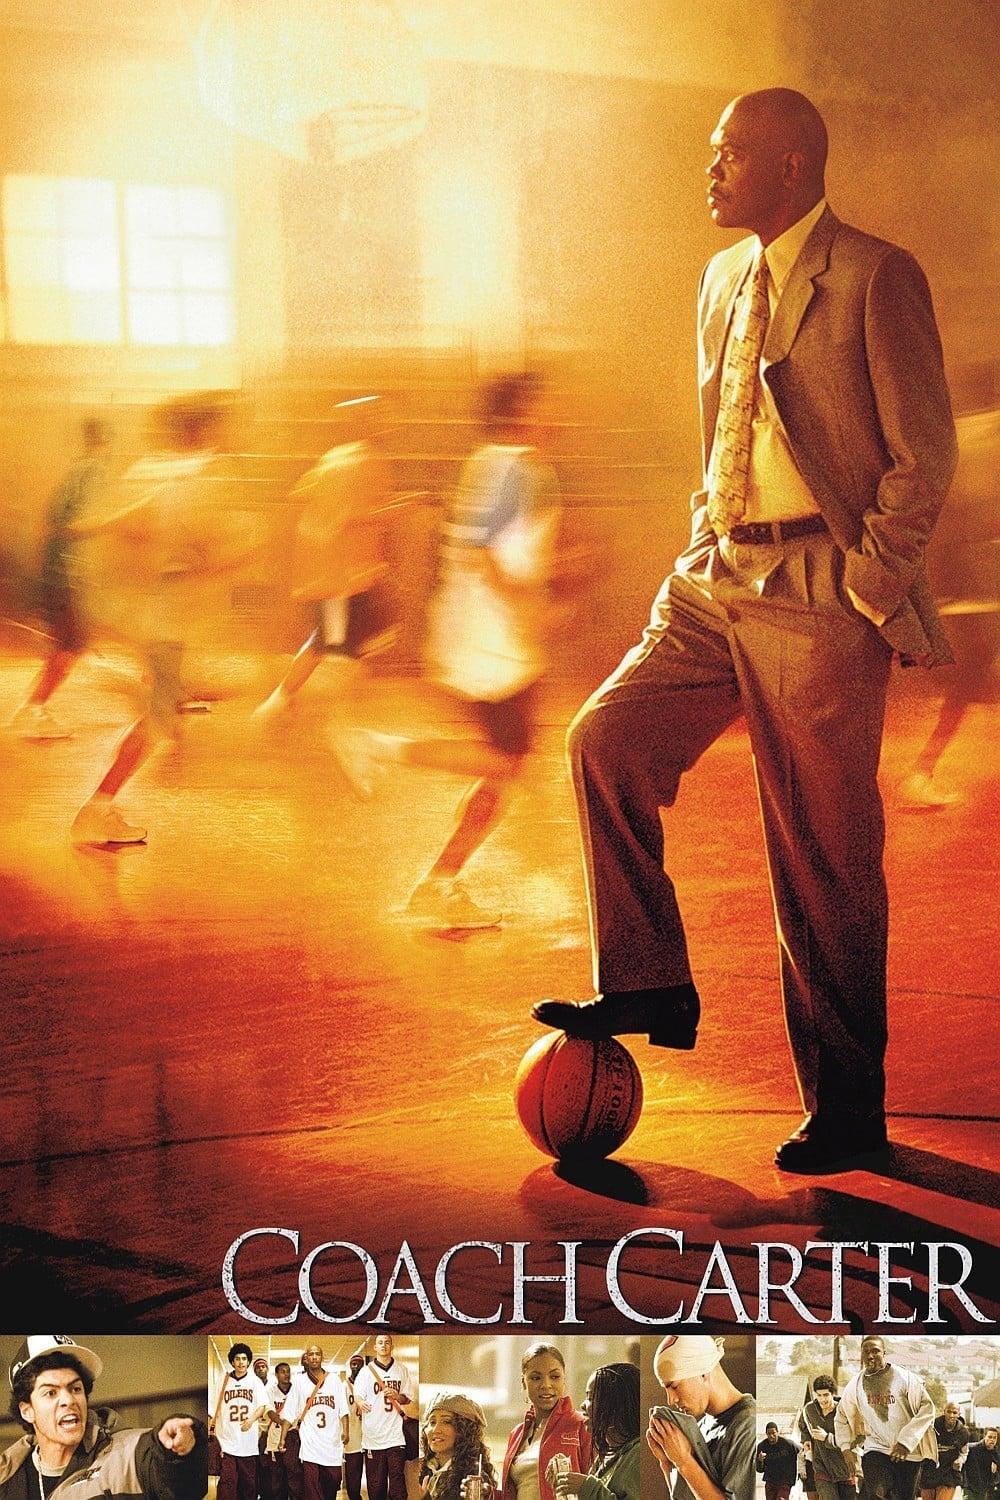 Coach Carter poster